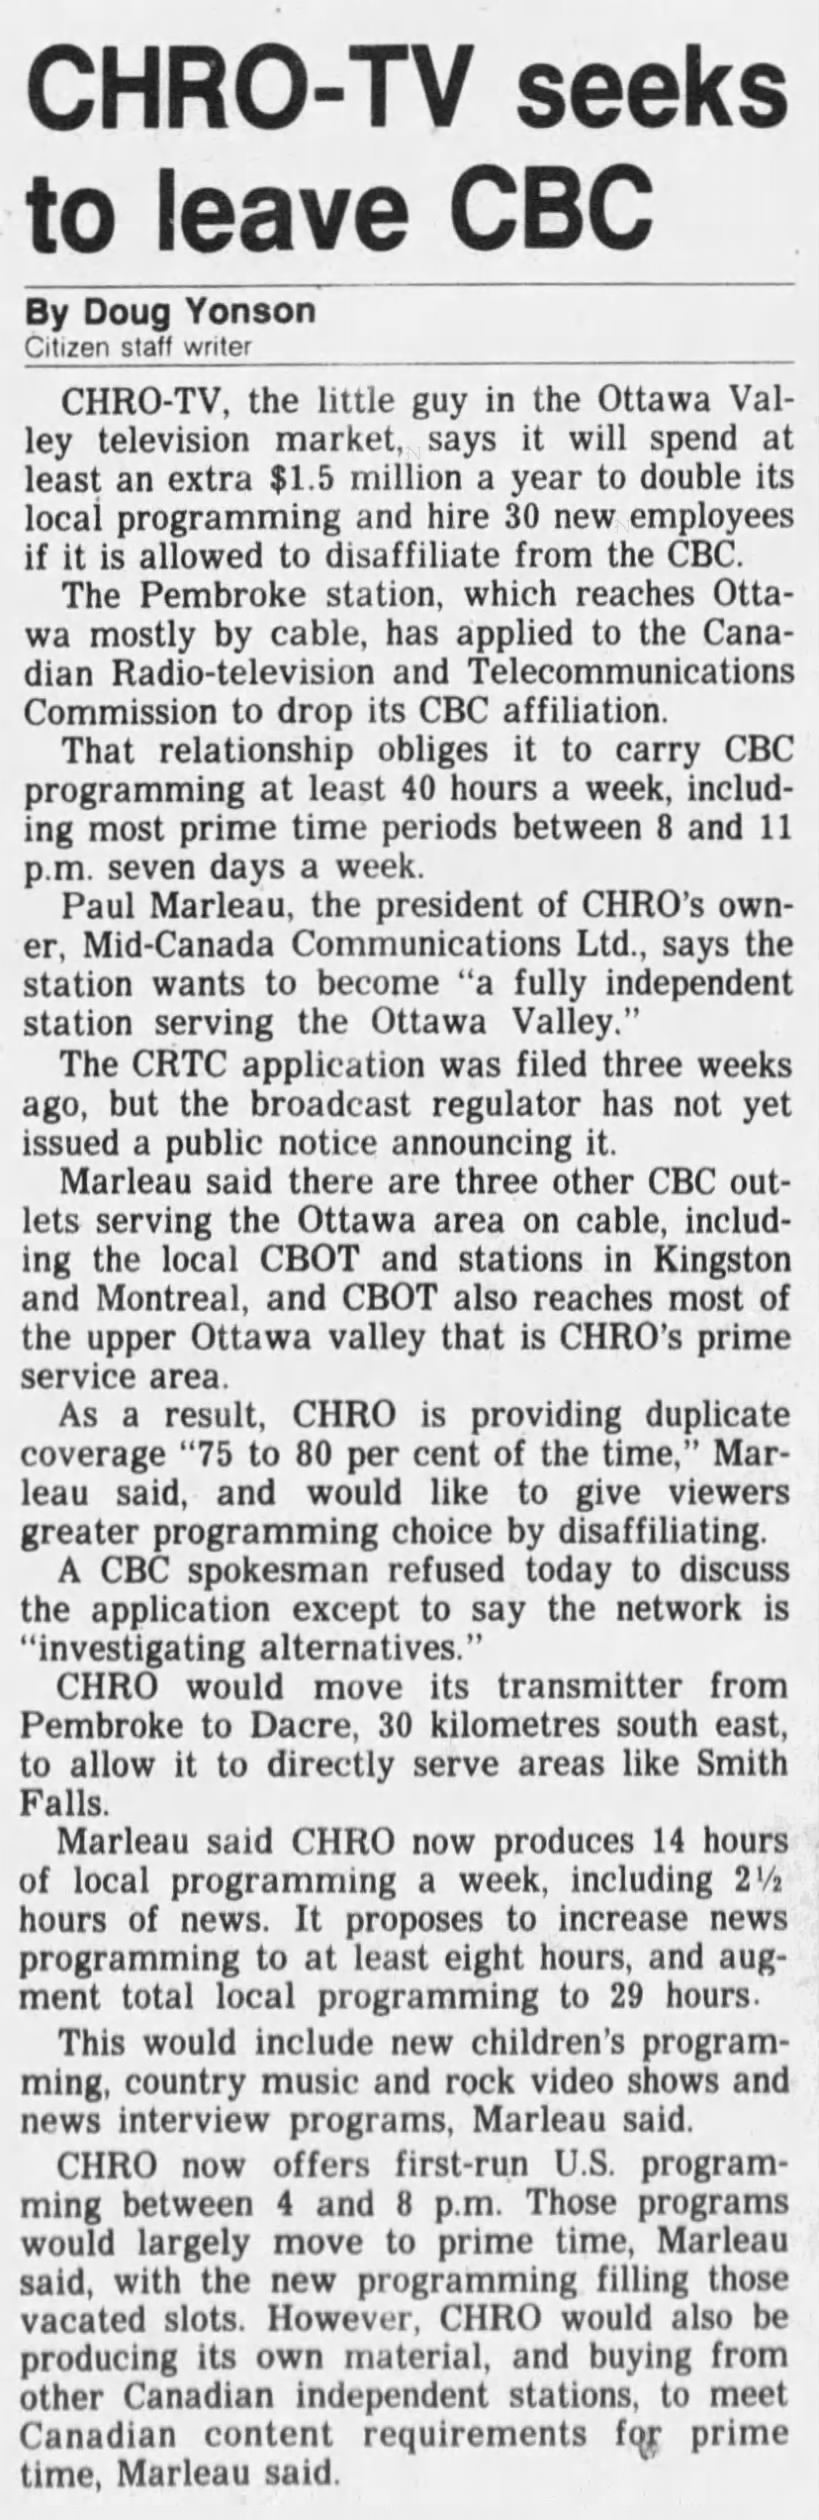 CHRO-TV seeks to leave CBC